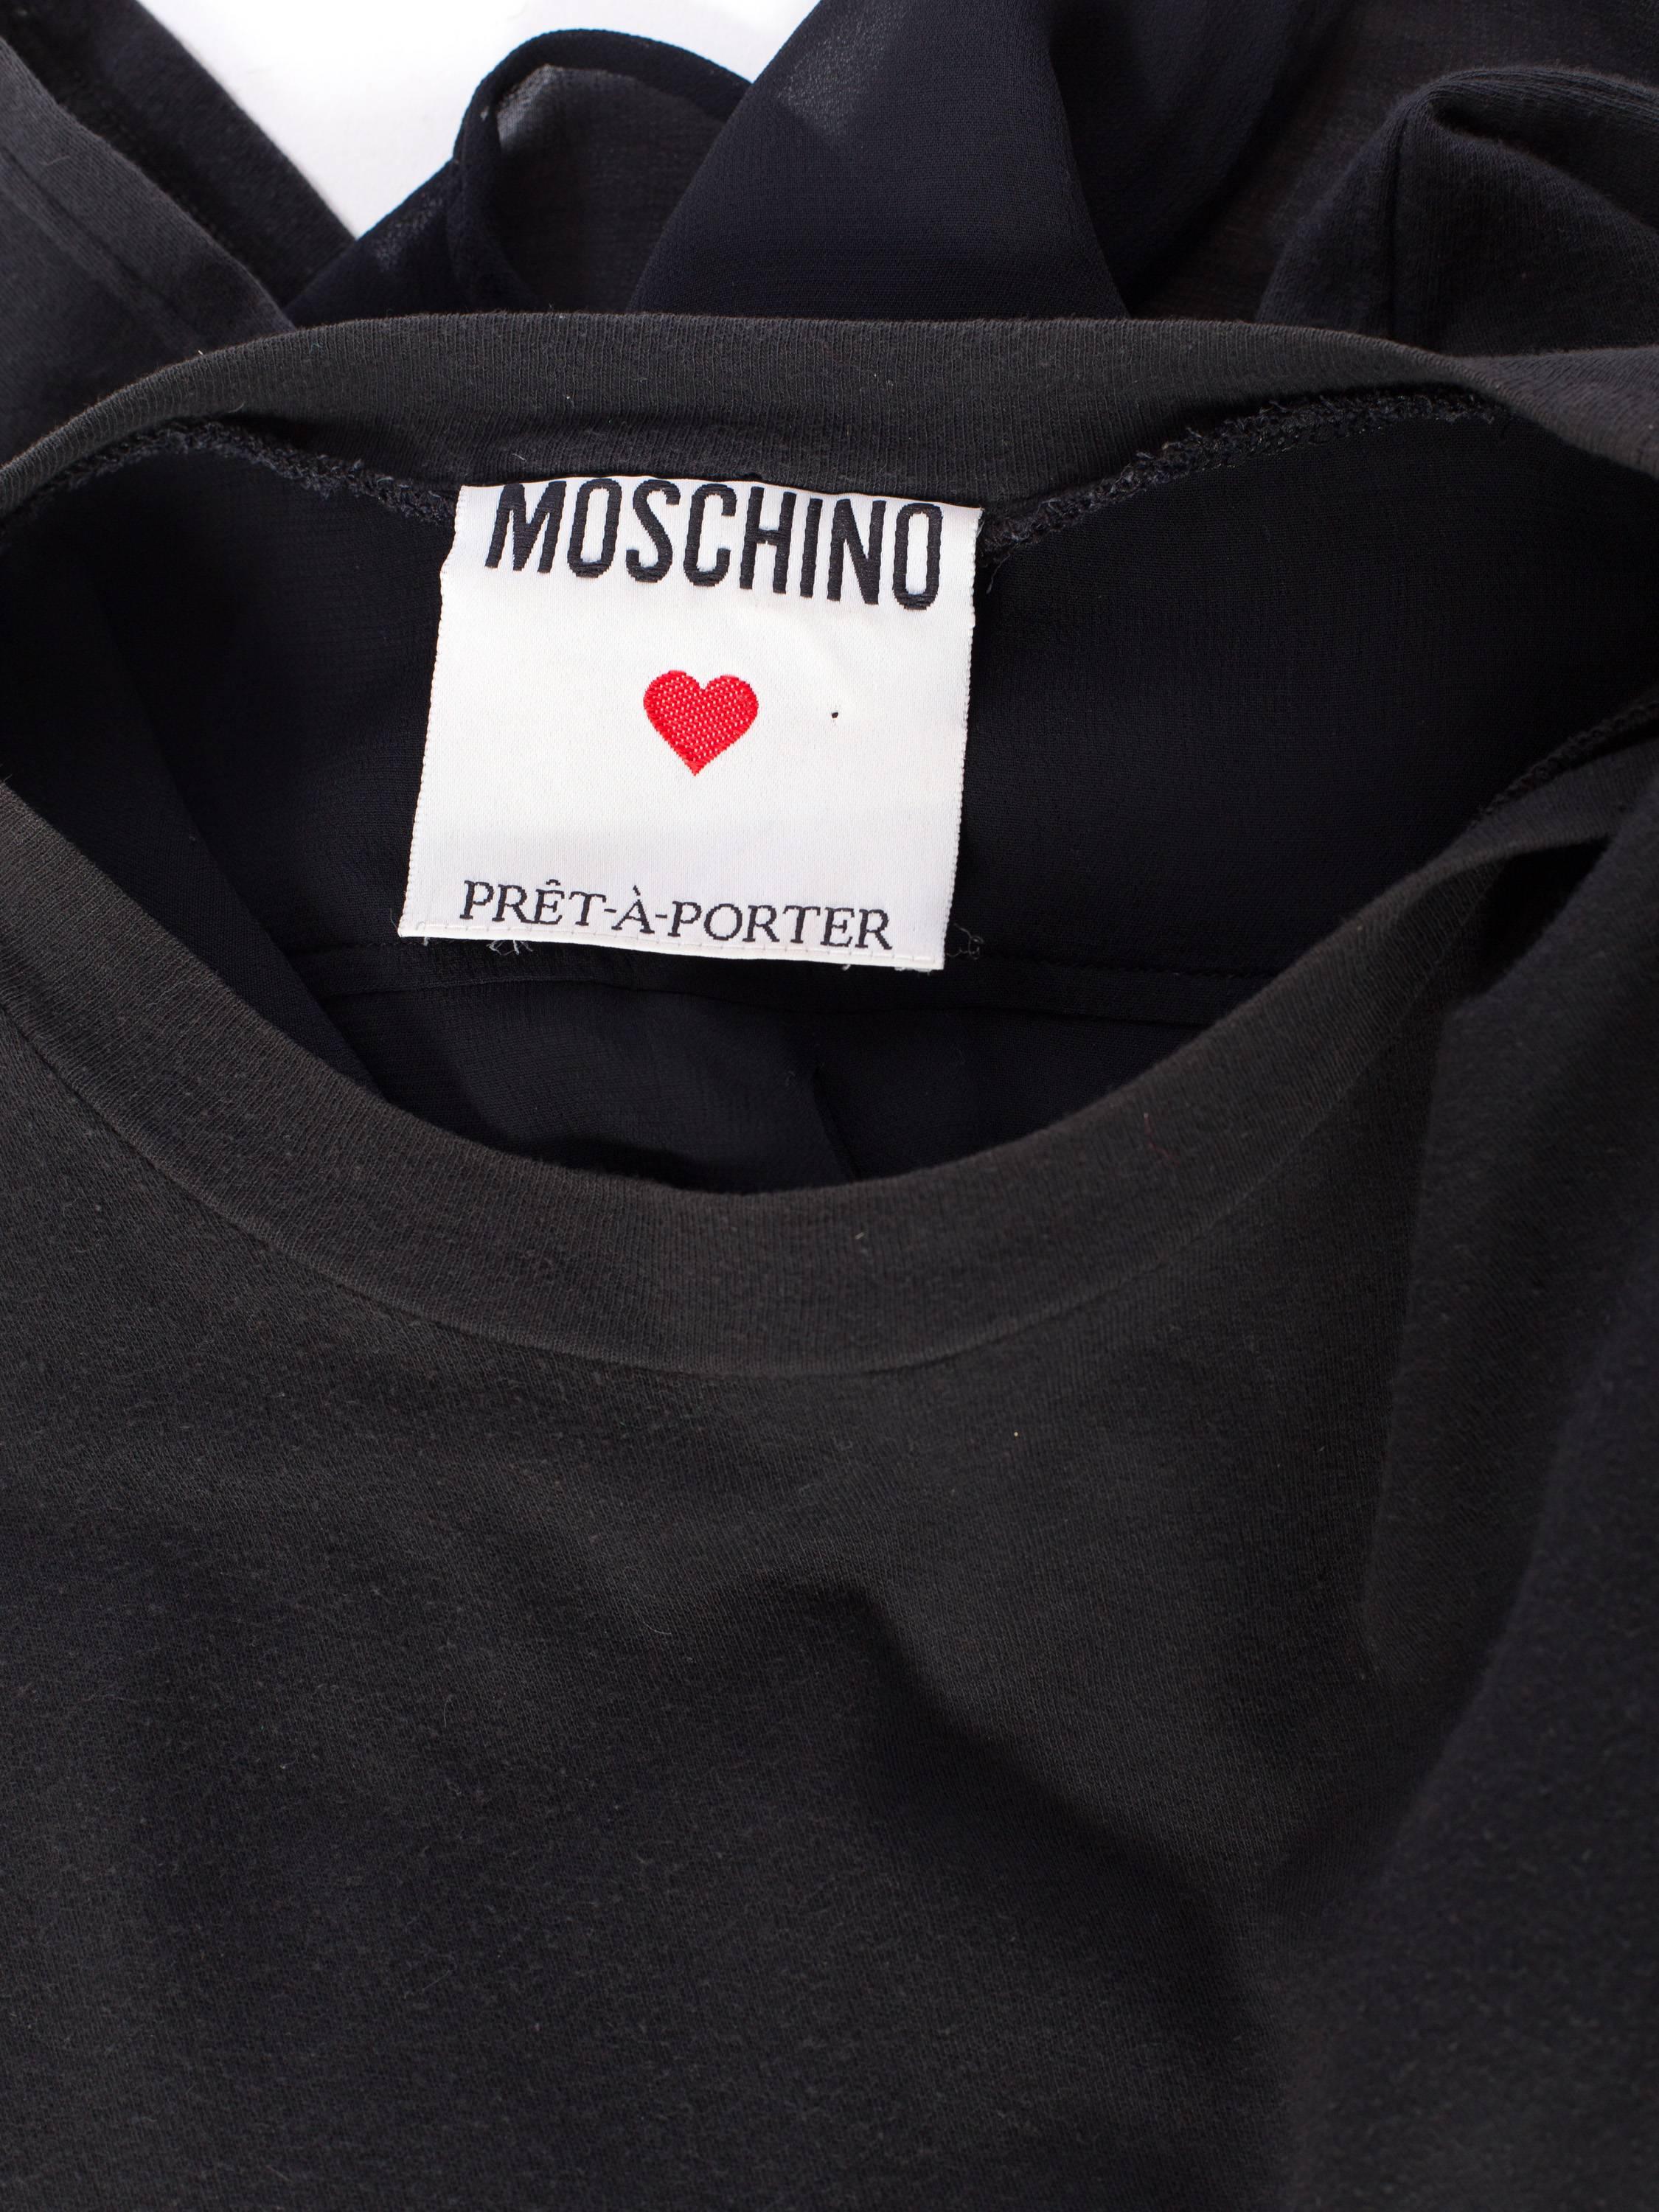 1990S MOSCHINO Black Cotton T-Shirt With Sheer Chiffon Back 7